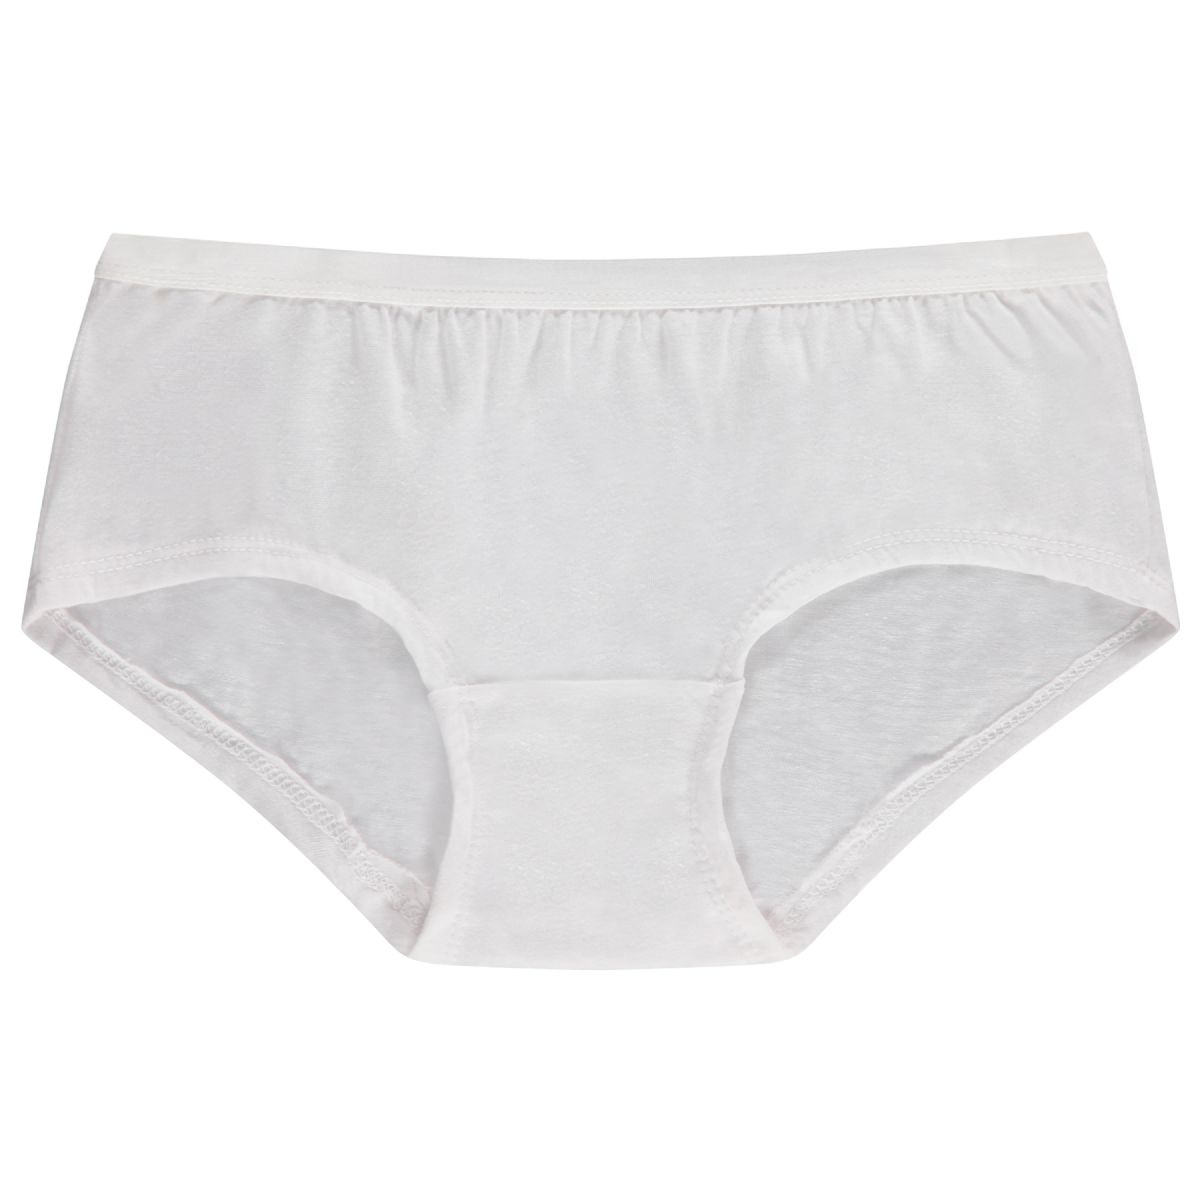 Yacht & Smith Womens Cotton Lycra Underwear White Panty Briefs In Bulk, 95%  Cotton Soft Size X-Small - Womens Panties & Underwear - at 